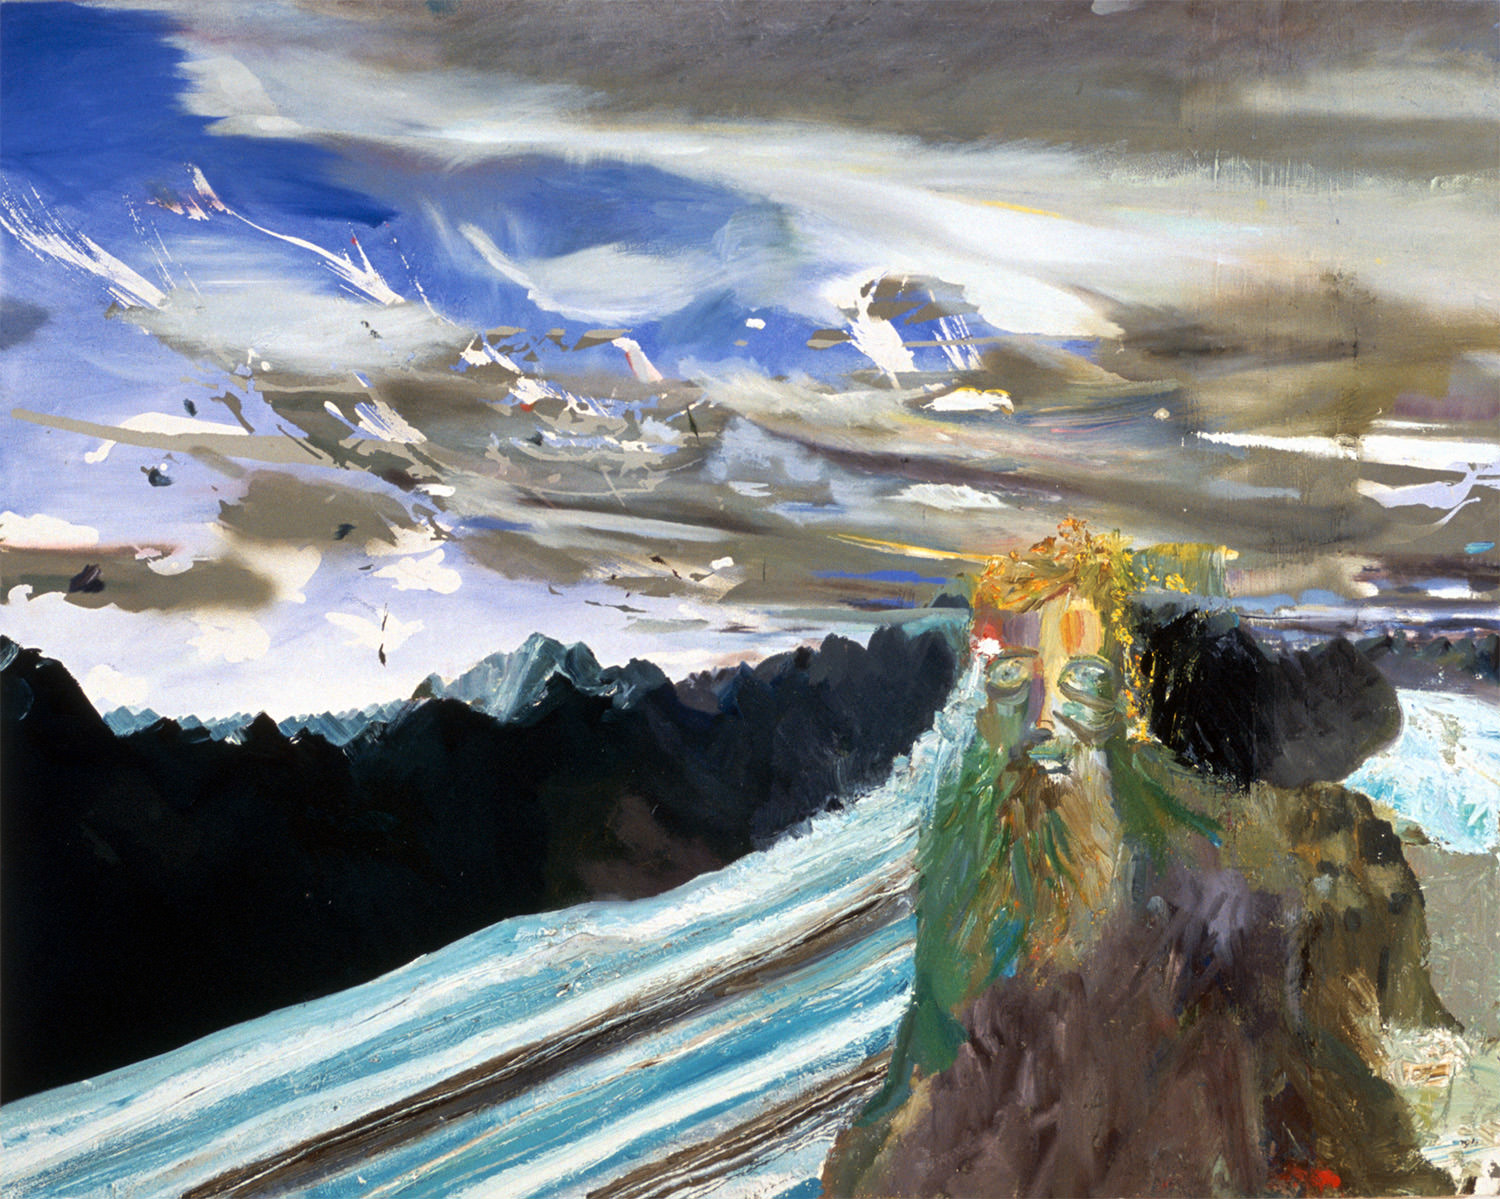   John Muir , 2004, oil on canvas, 48 x 72 inches 